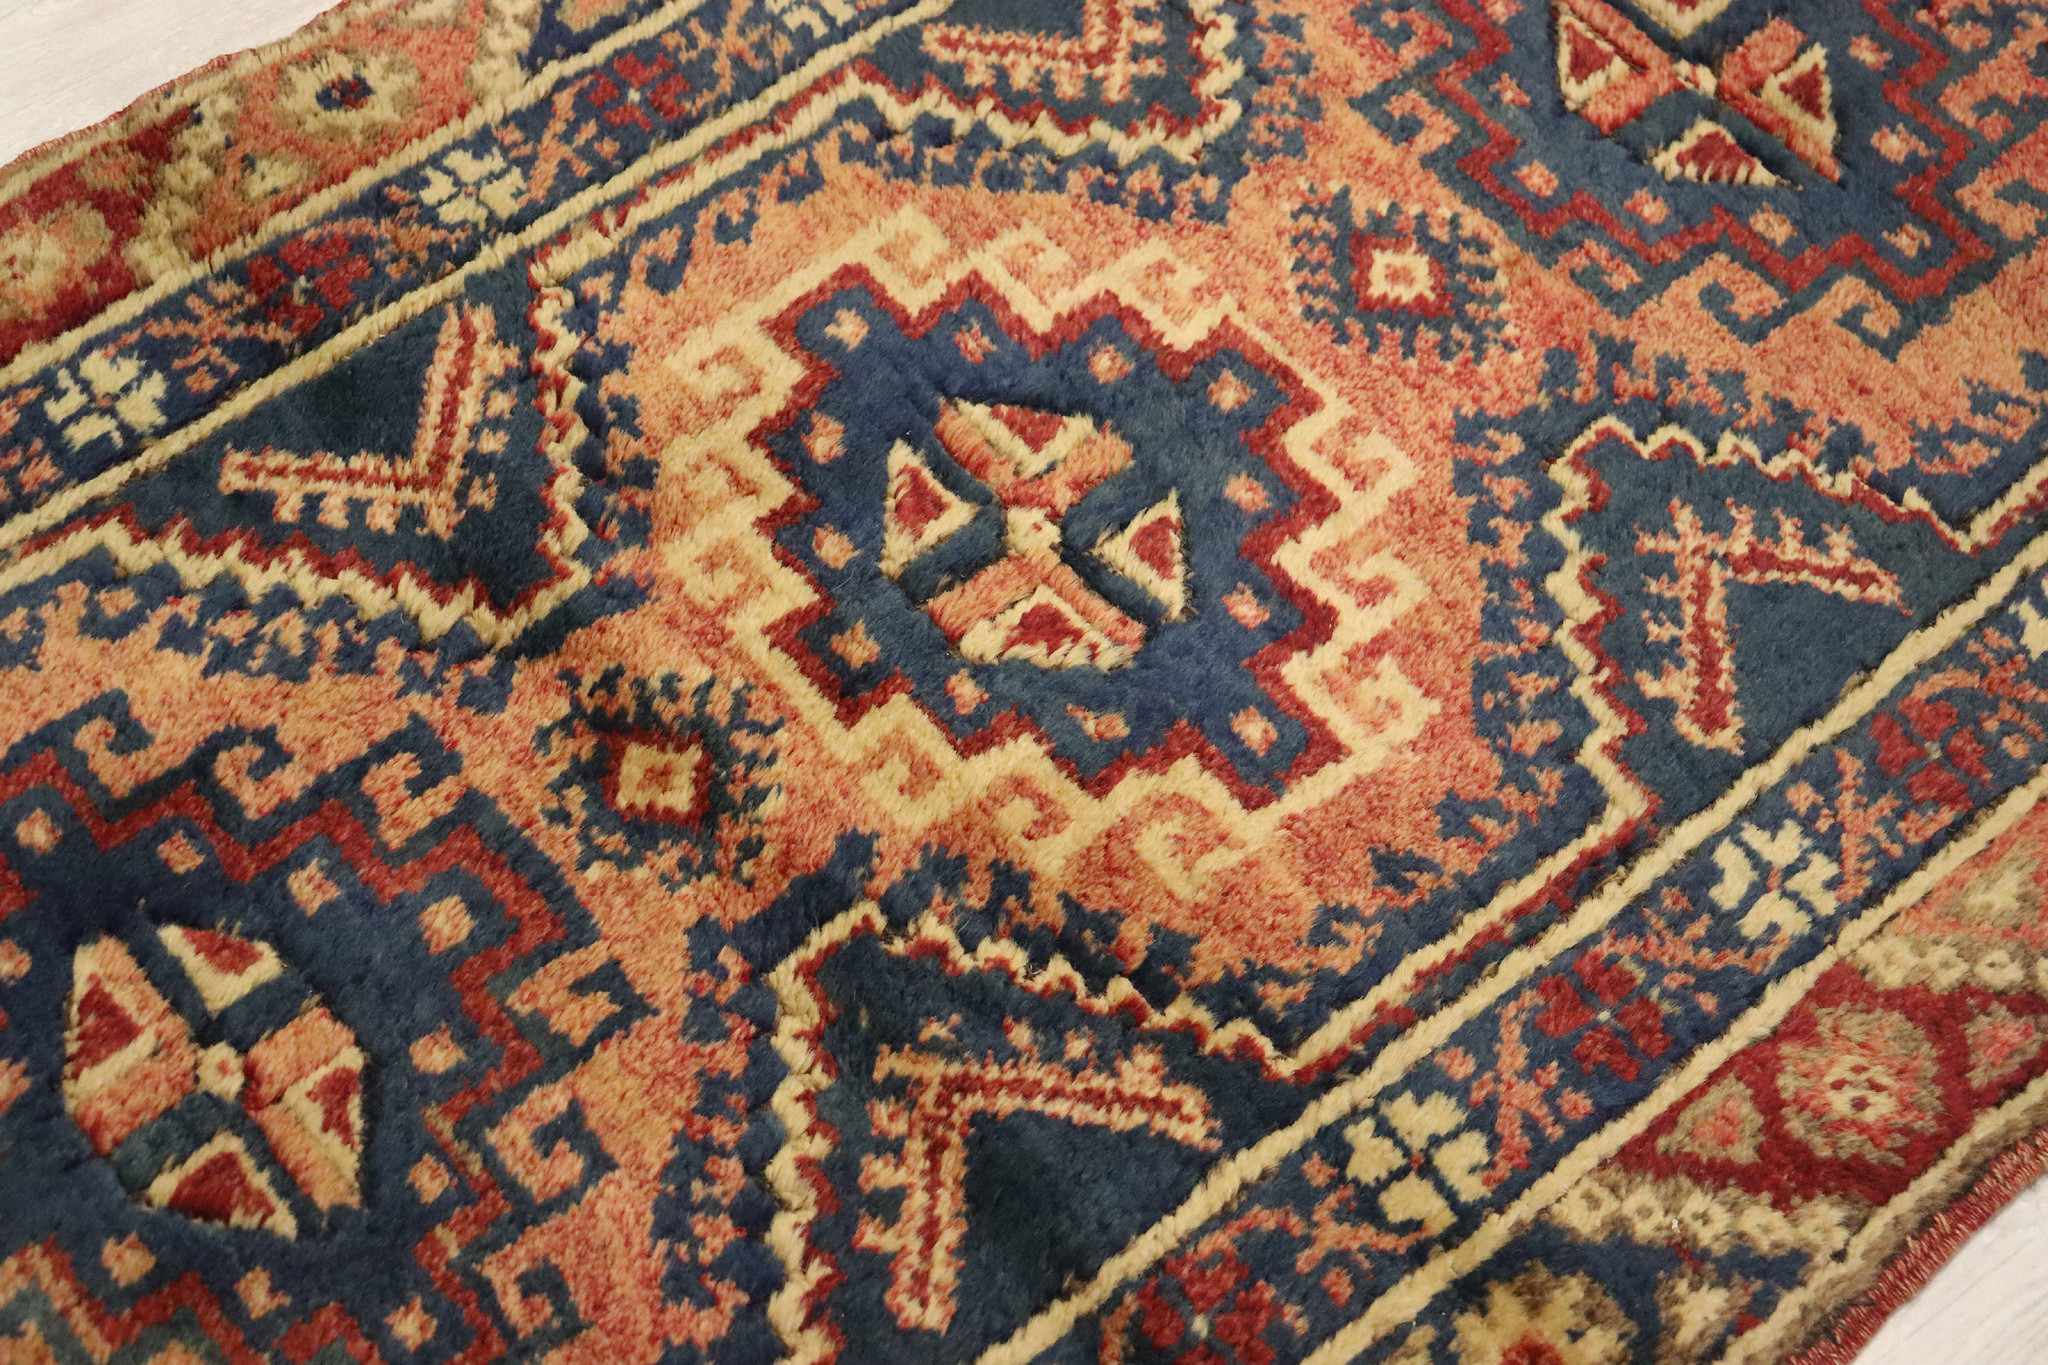 142x75 cm Vintage hand knotted Turkish Kars oriental carpet No: TRK-73